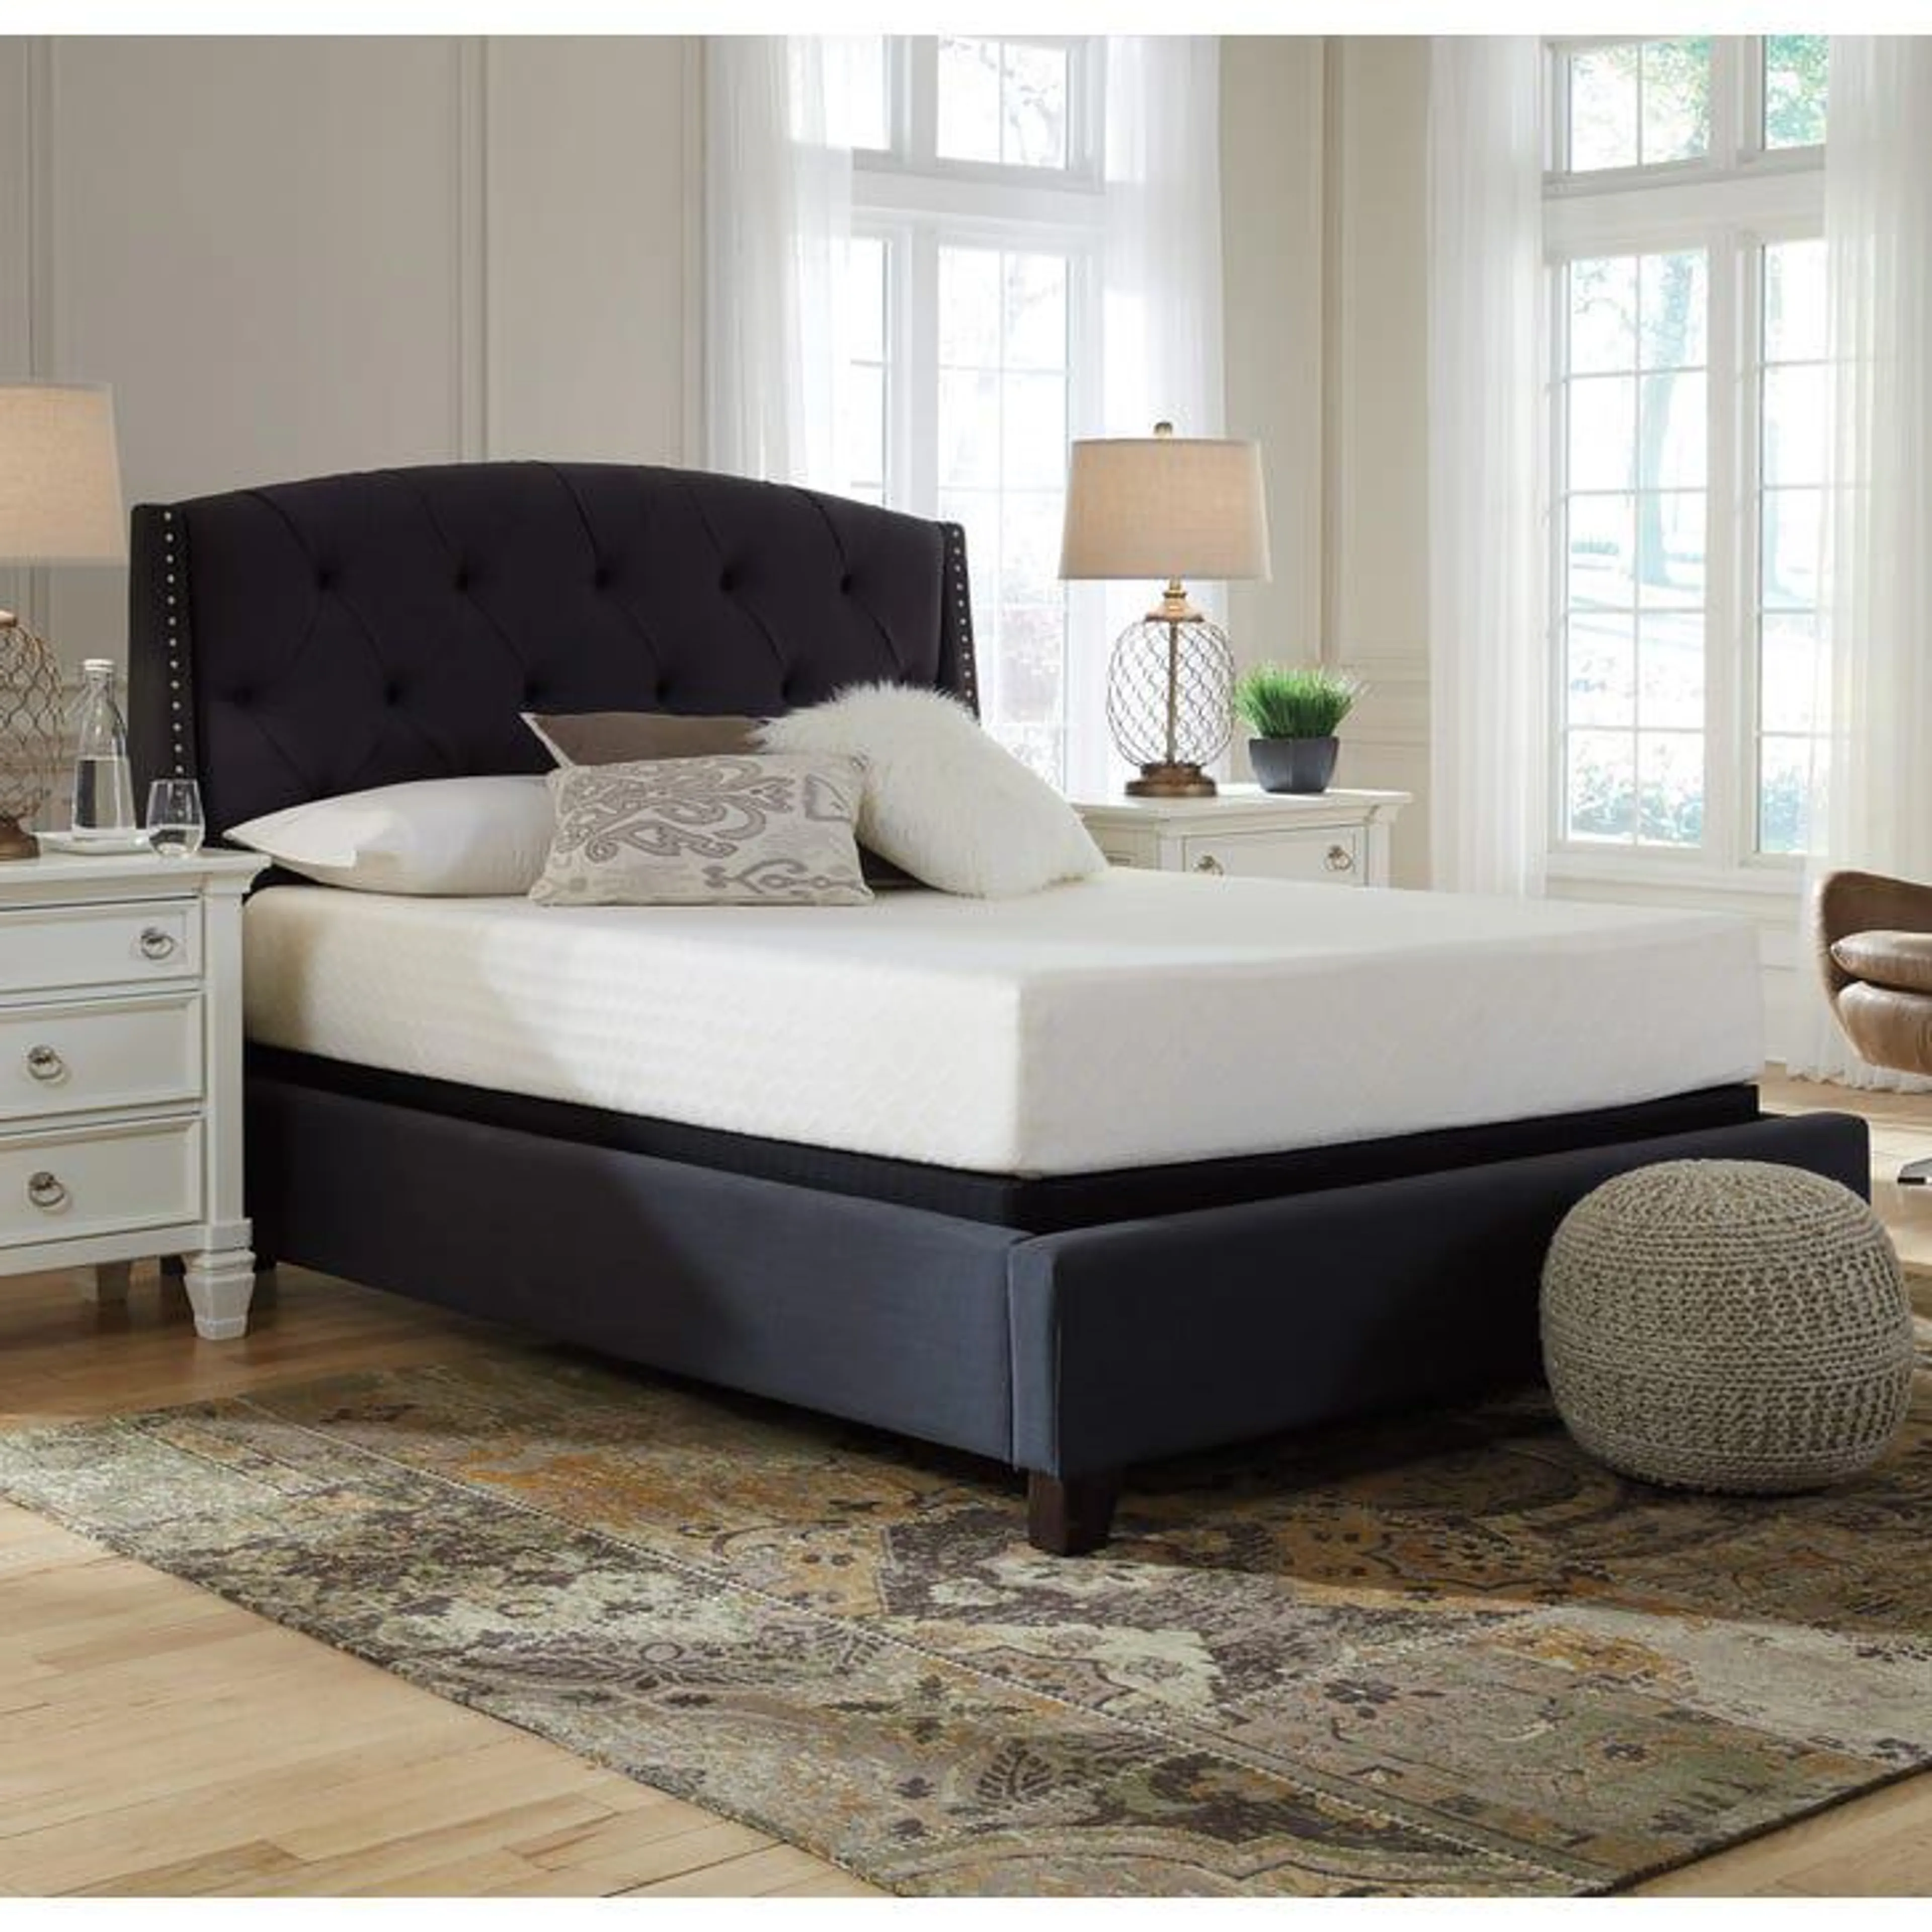 Queen Ashley Chime 10 inch Memory Foam Cushion Firm Bed in a Box Mattress